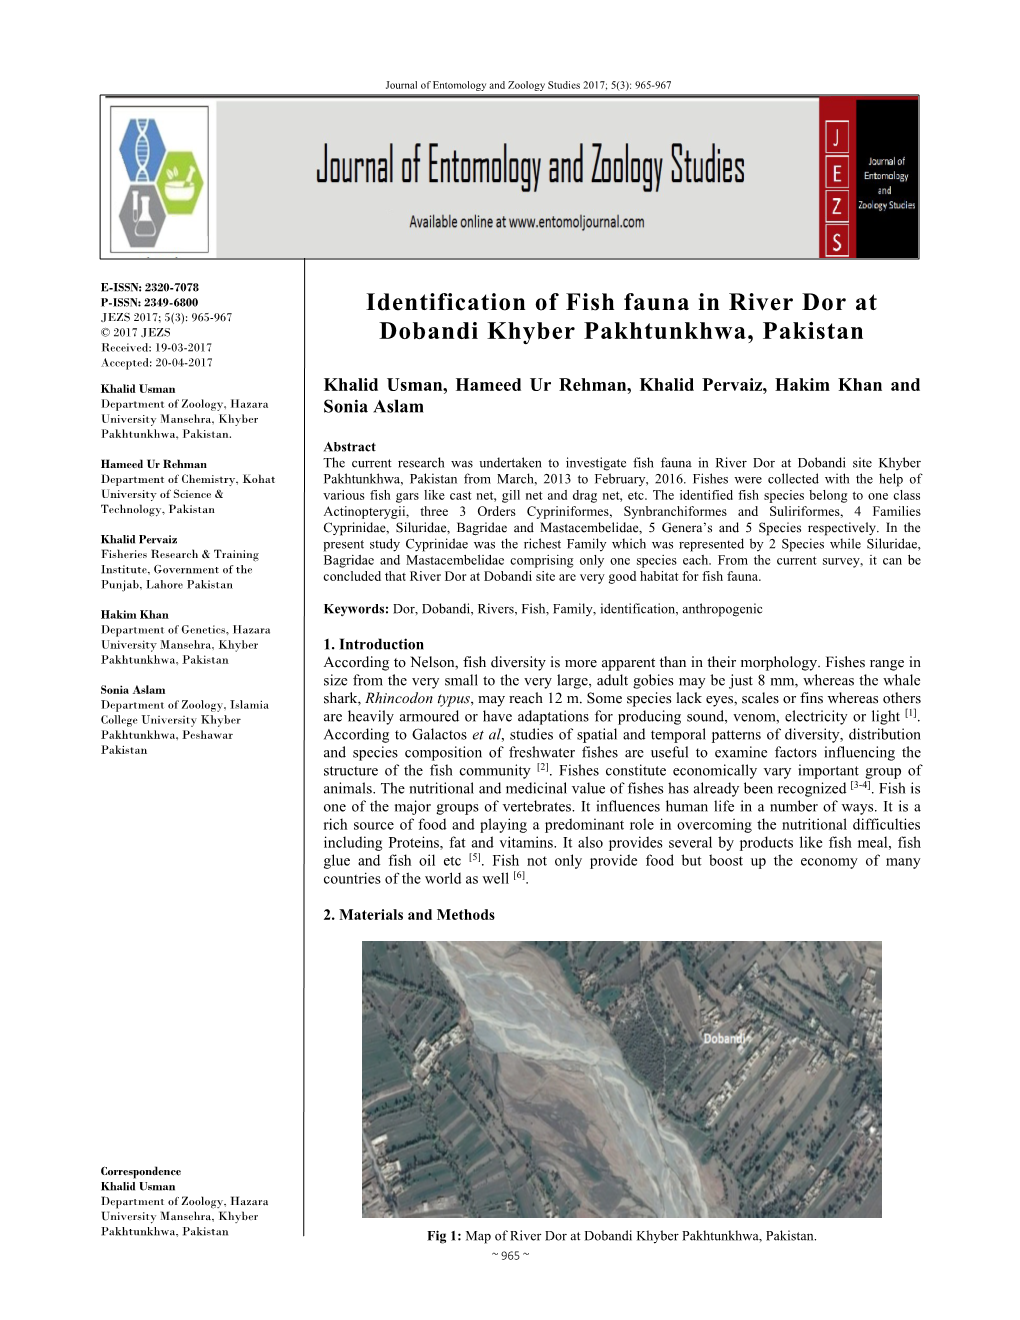 Identification of Fish Fauna in River Dor at Dobandi Khyber Pakhtunkhwa, Pakistan